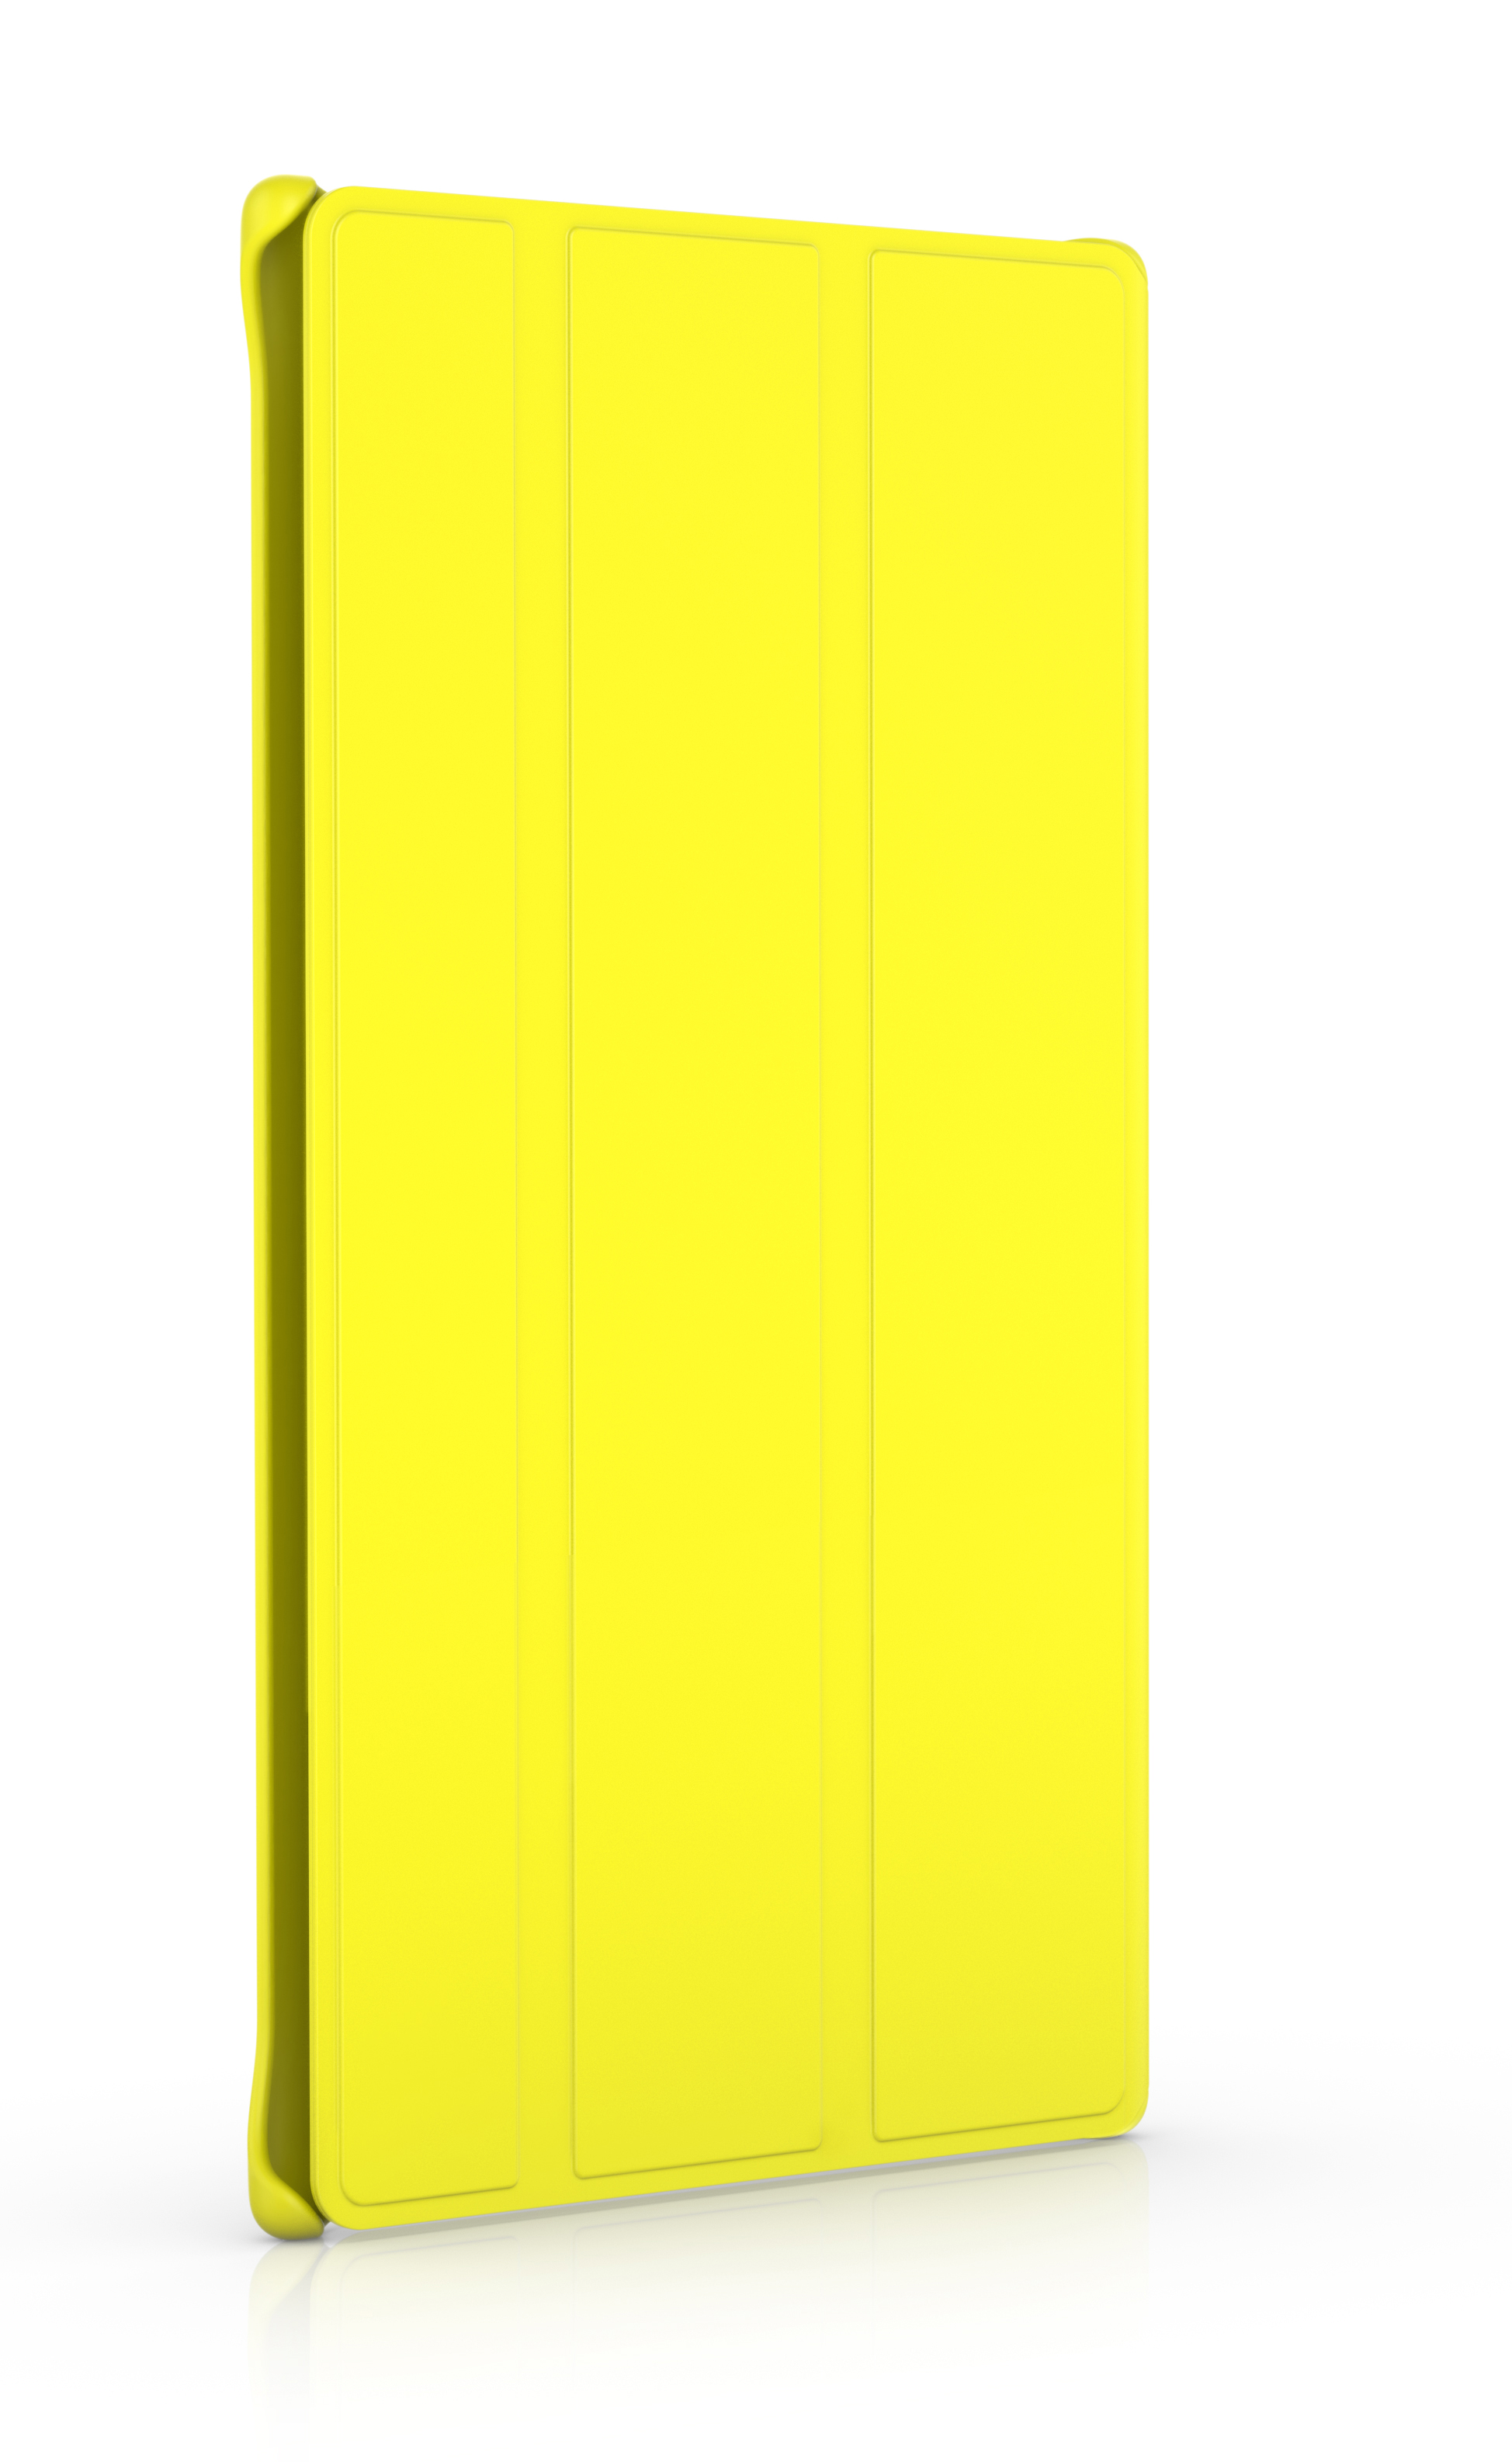 NOKIA Schutzhülle für Lumia Flip 1520 Gelb, 1520, Lumia Gelb Microsoft, Cover